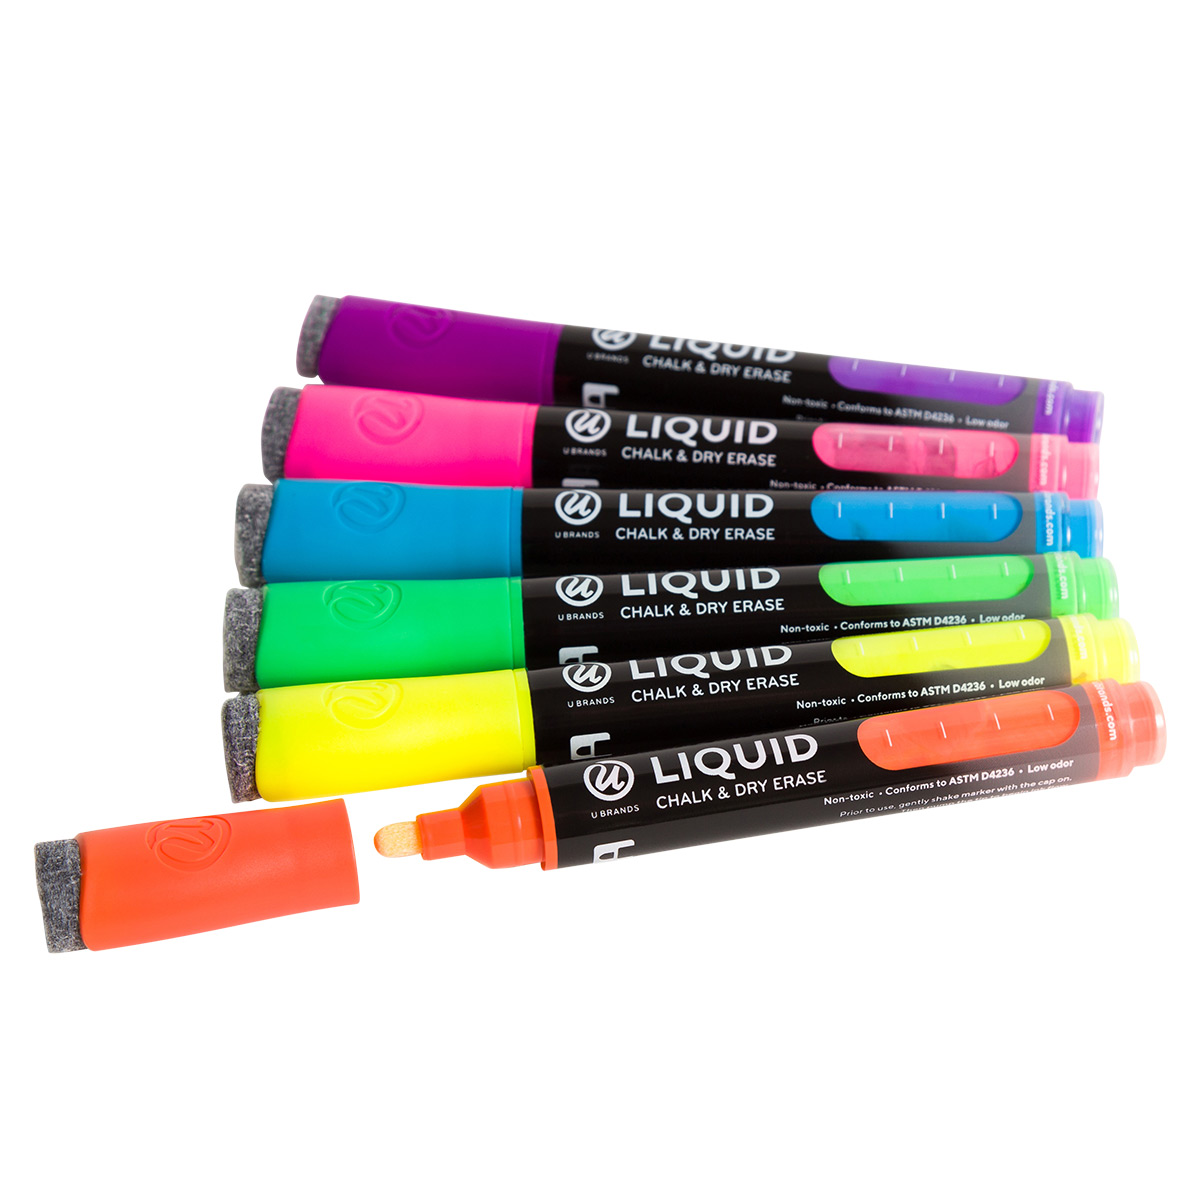 bold chalk markers-dry erase marker pens-chalk